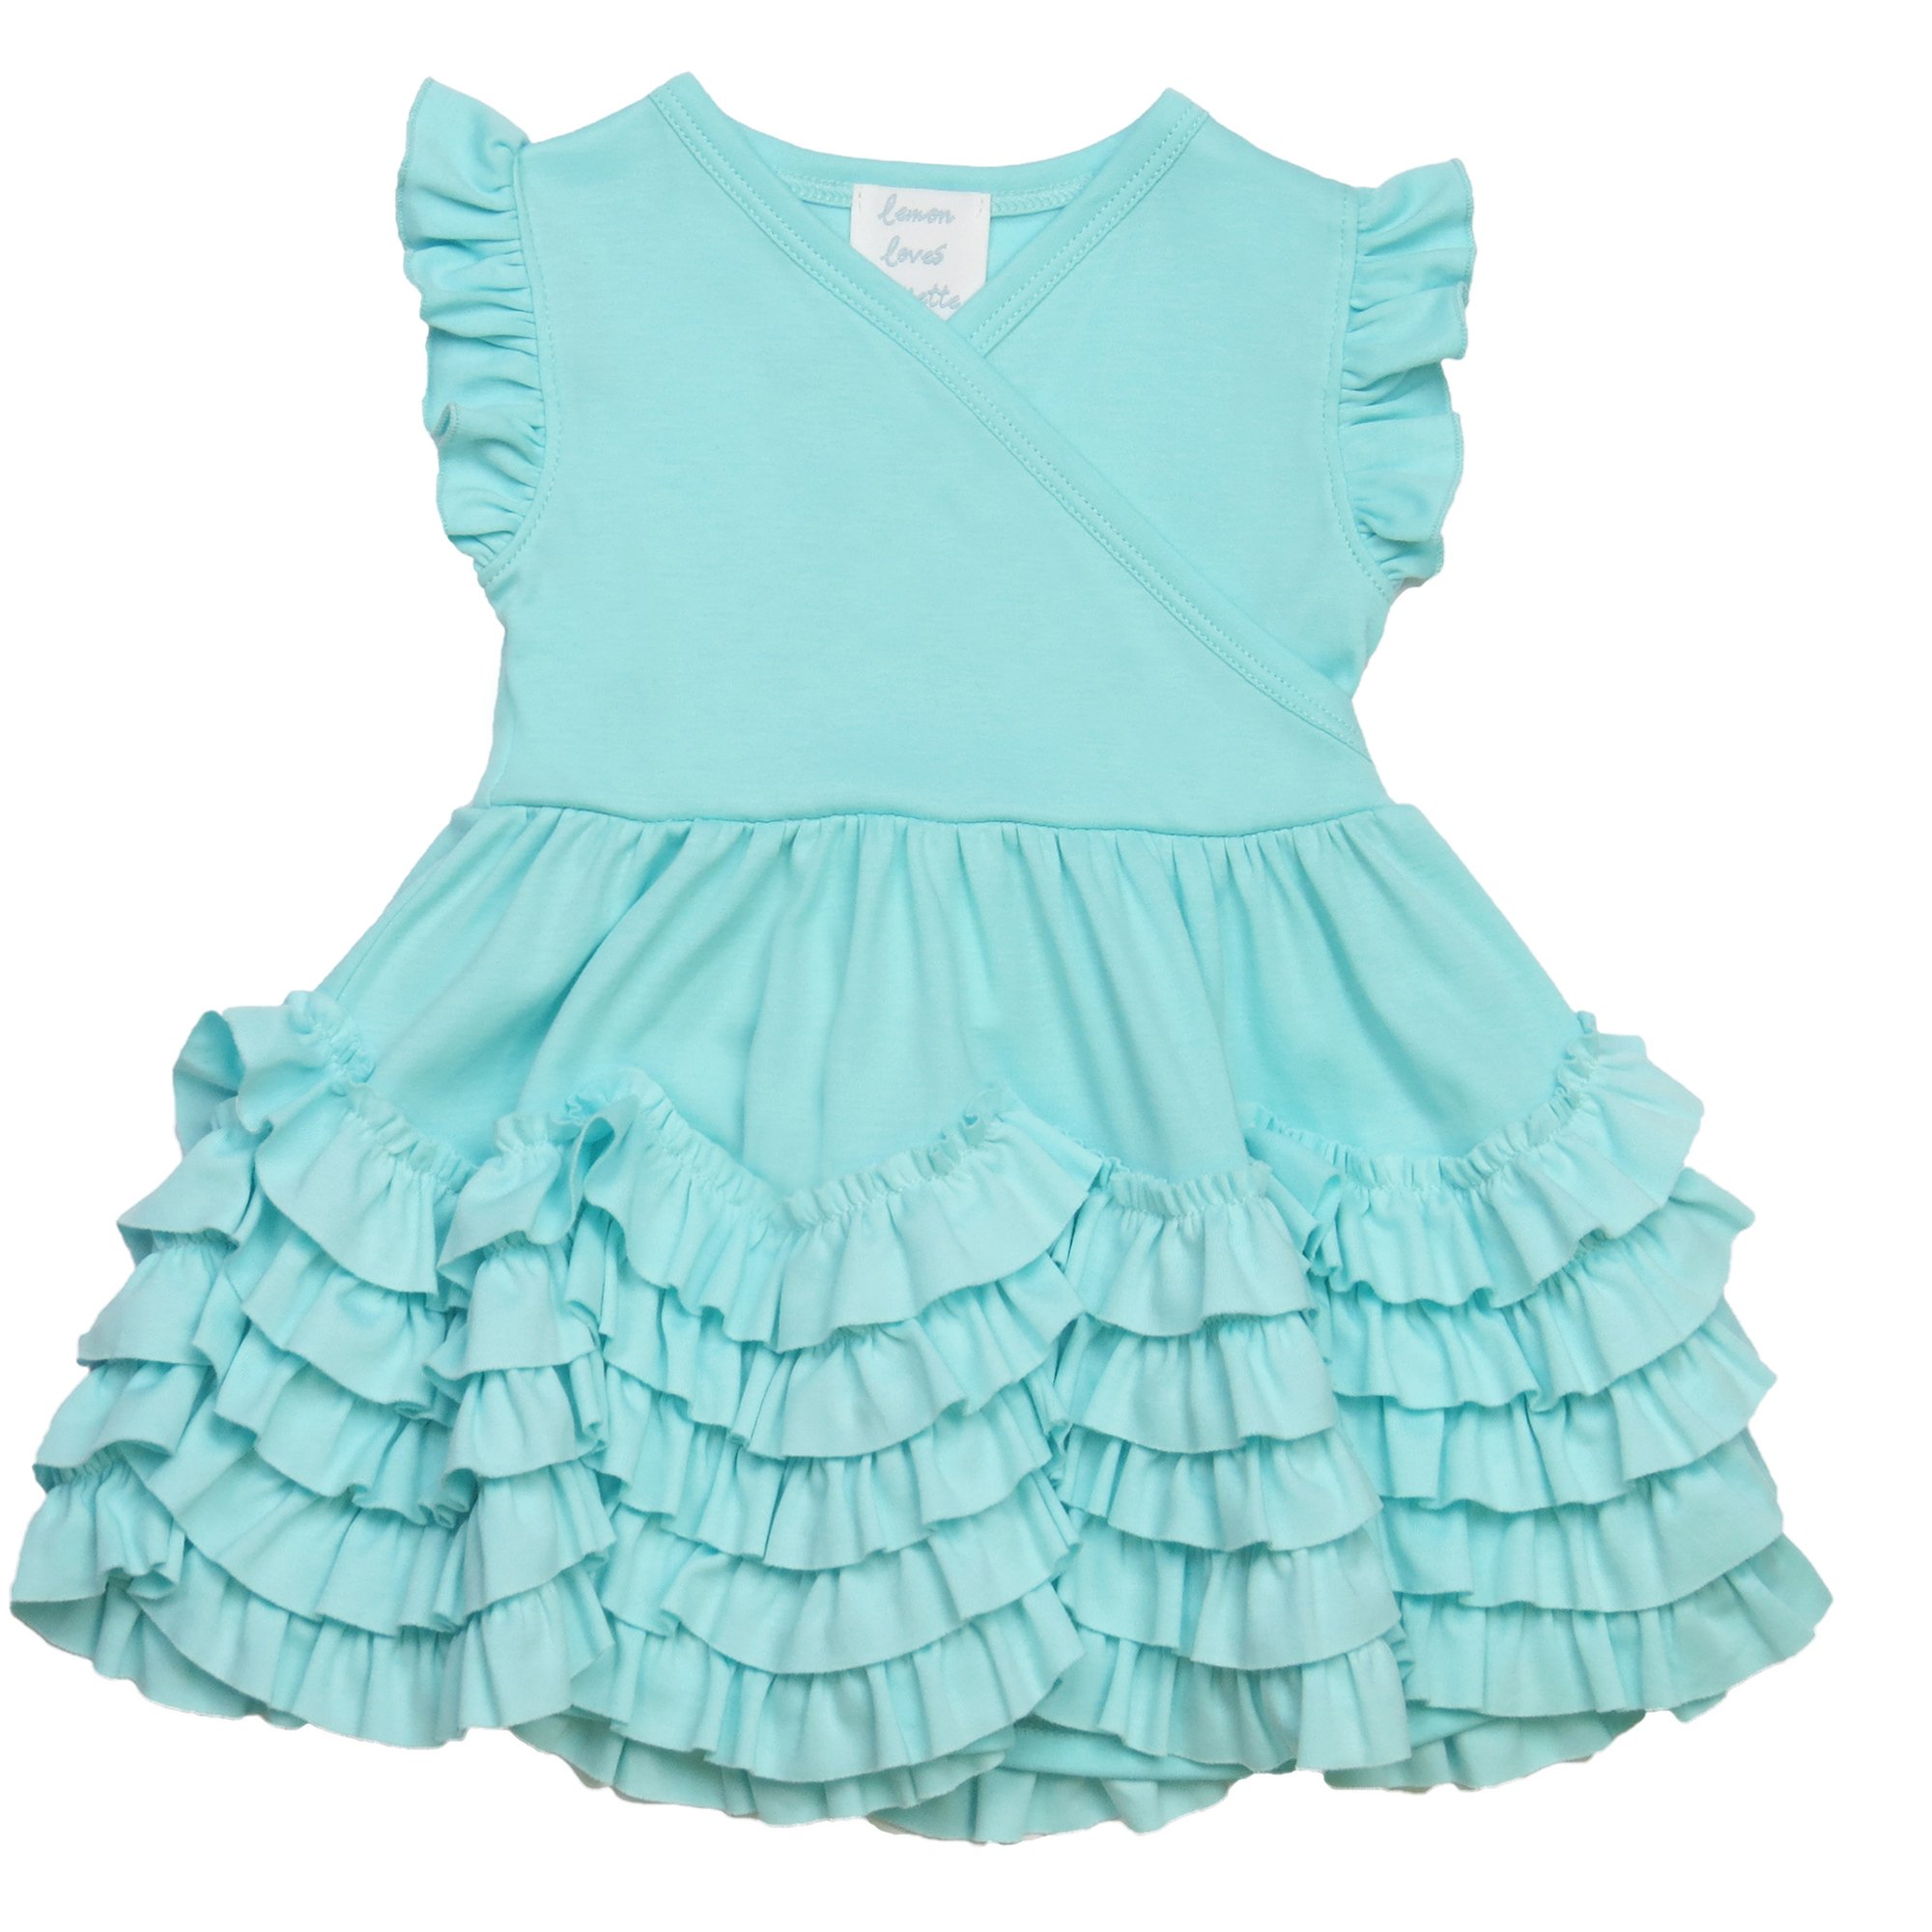 Lemon Loves Layette Aqua Blue Baby Dress - Mia